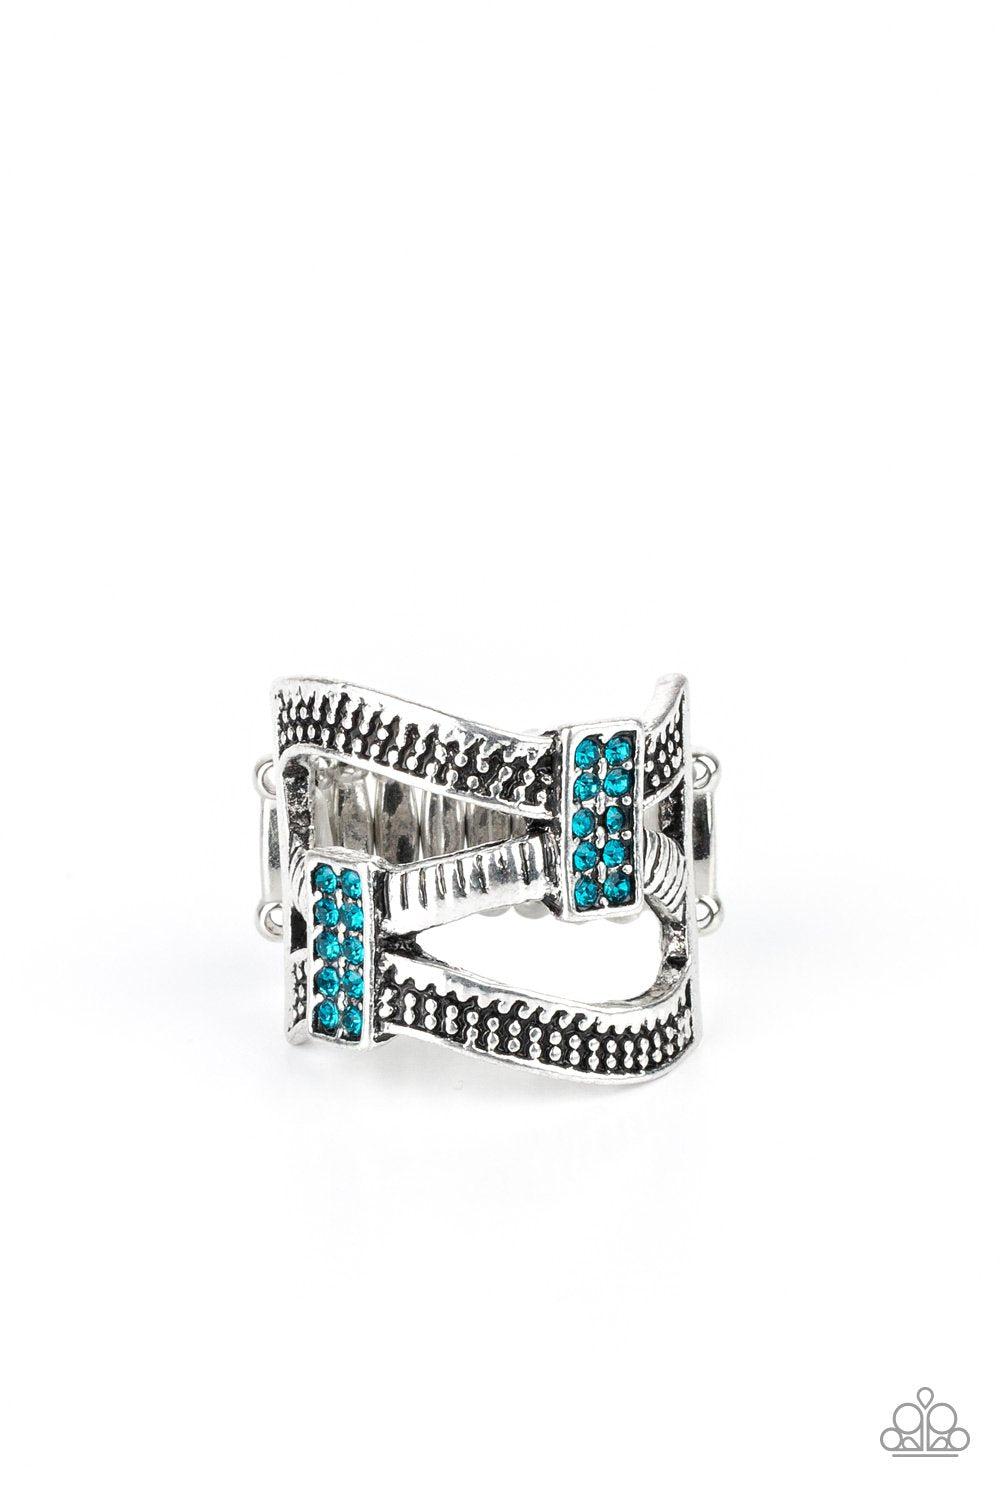 Urban Upscale Blue Rhinestone Ring - Paparazzi Accessories- lightbox - CarasShop.com - $5 Jewelry by Cara Jewels